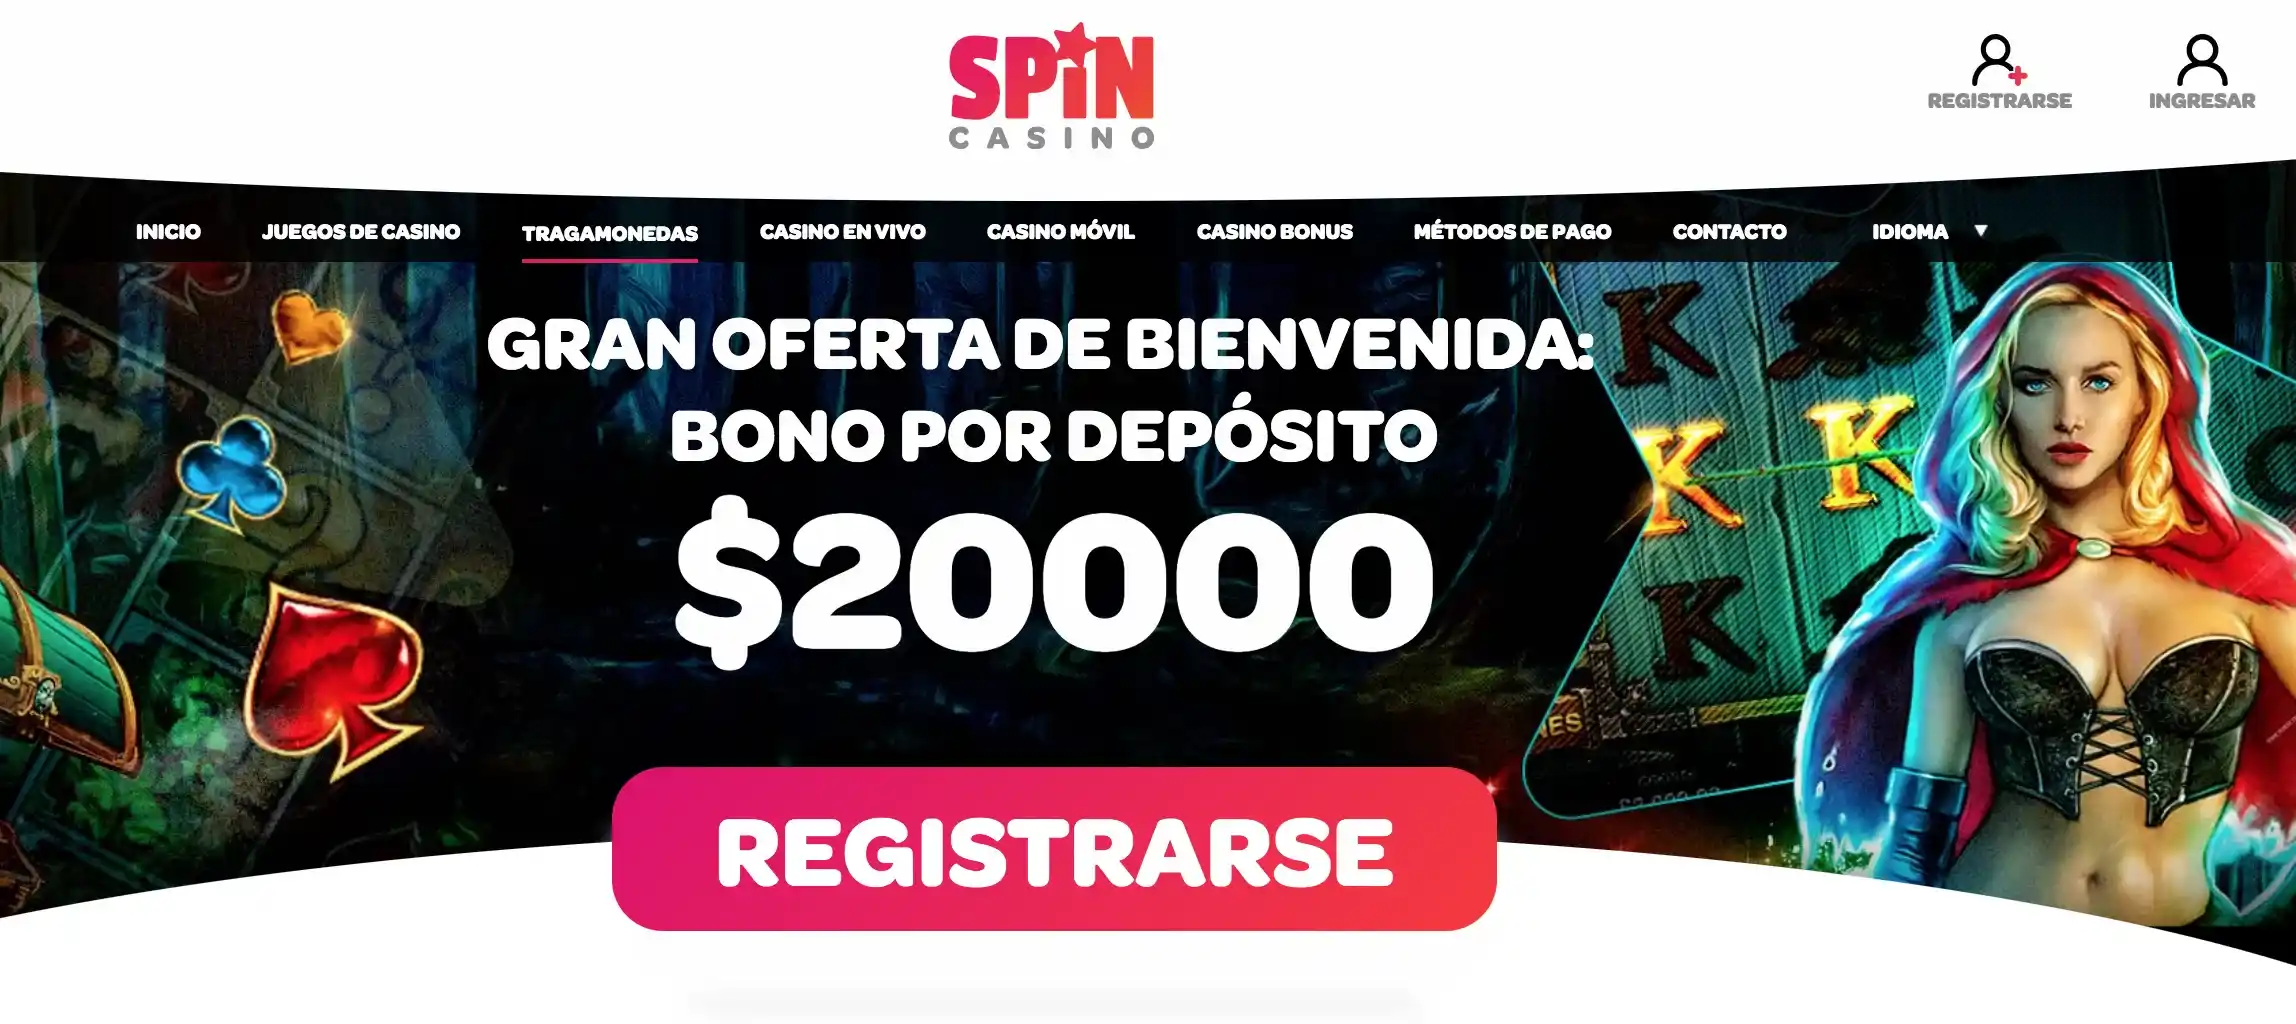 Bonos casinos online tragamonedas